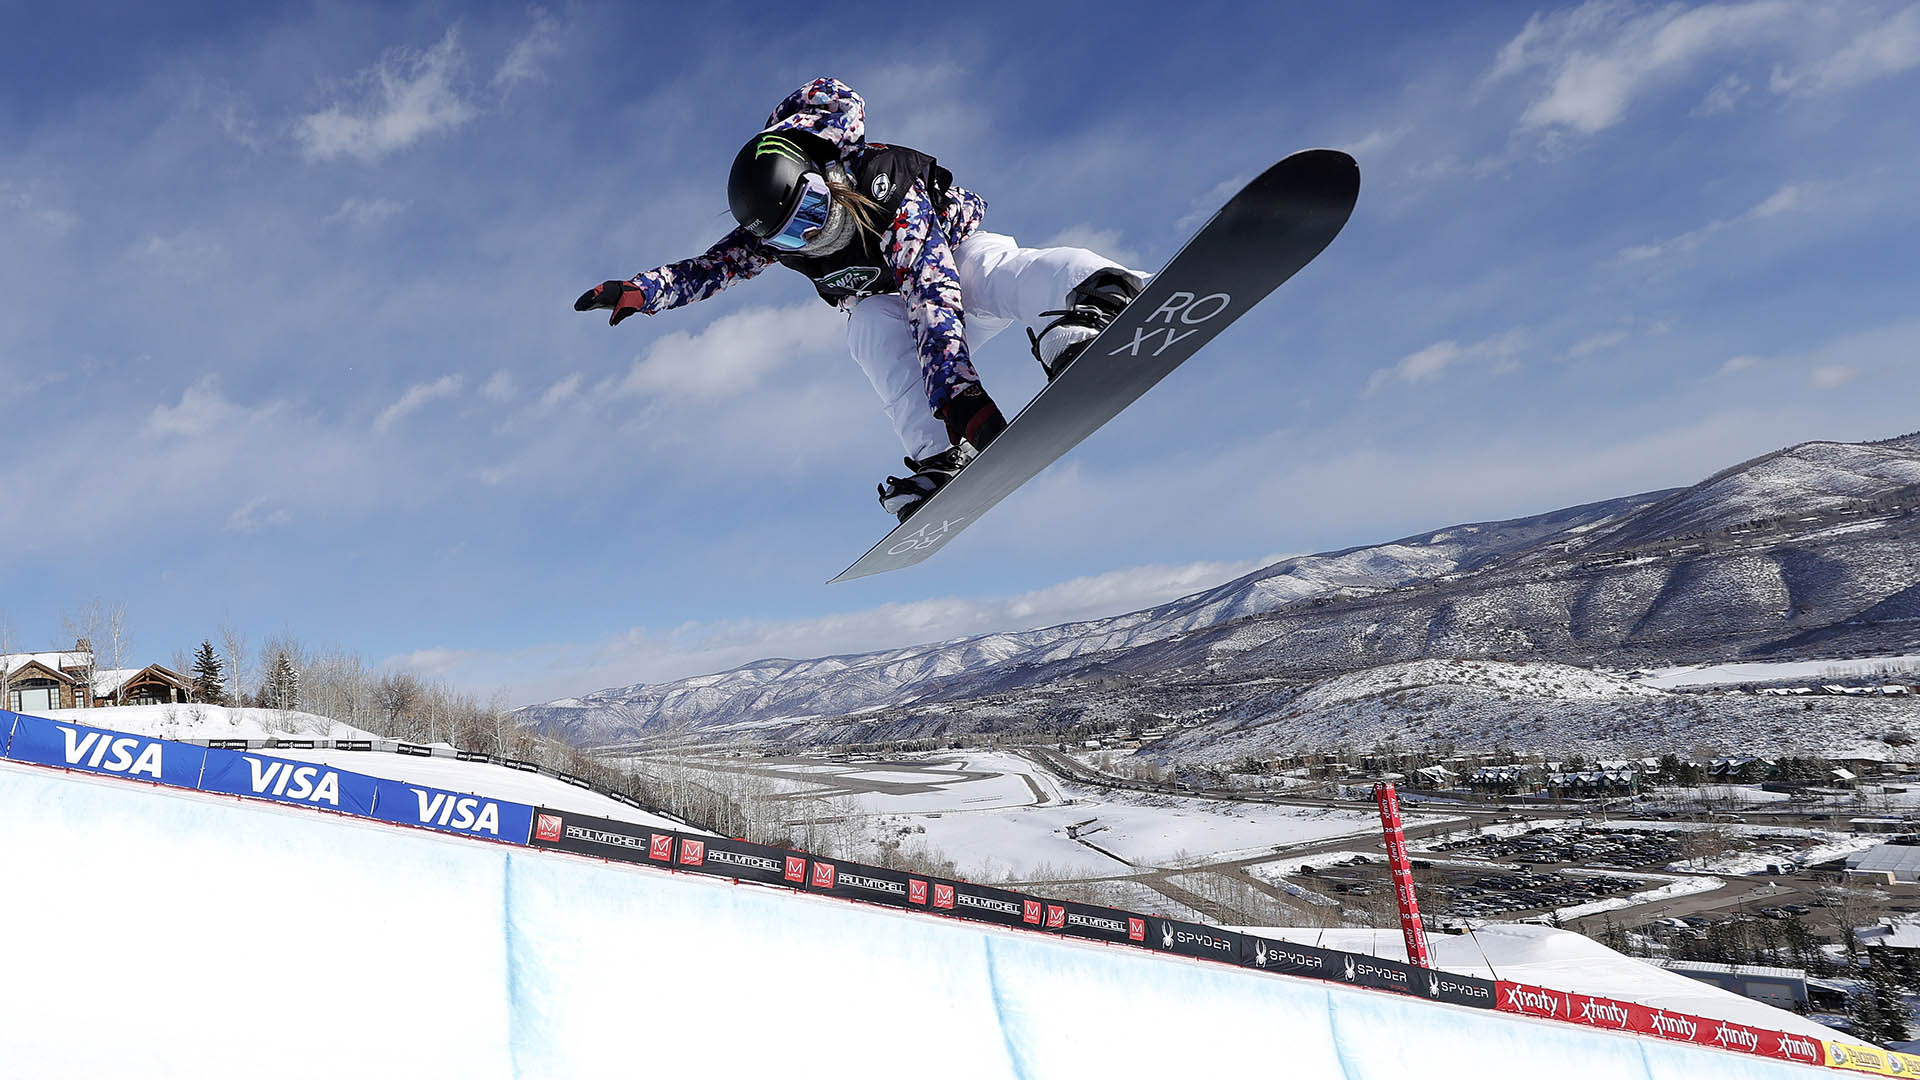 winter olympics snowboarding live